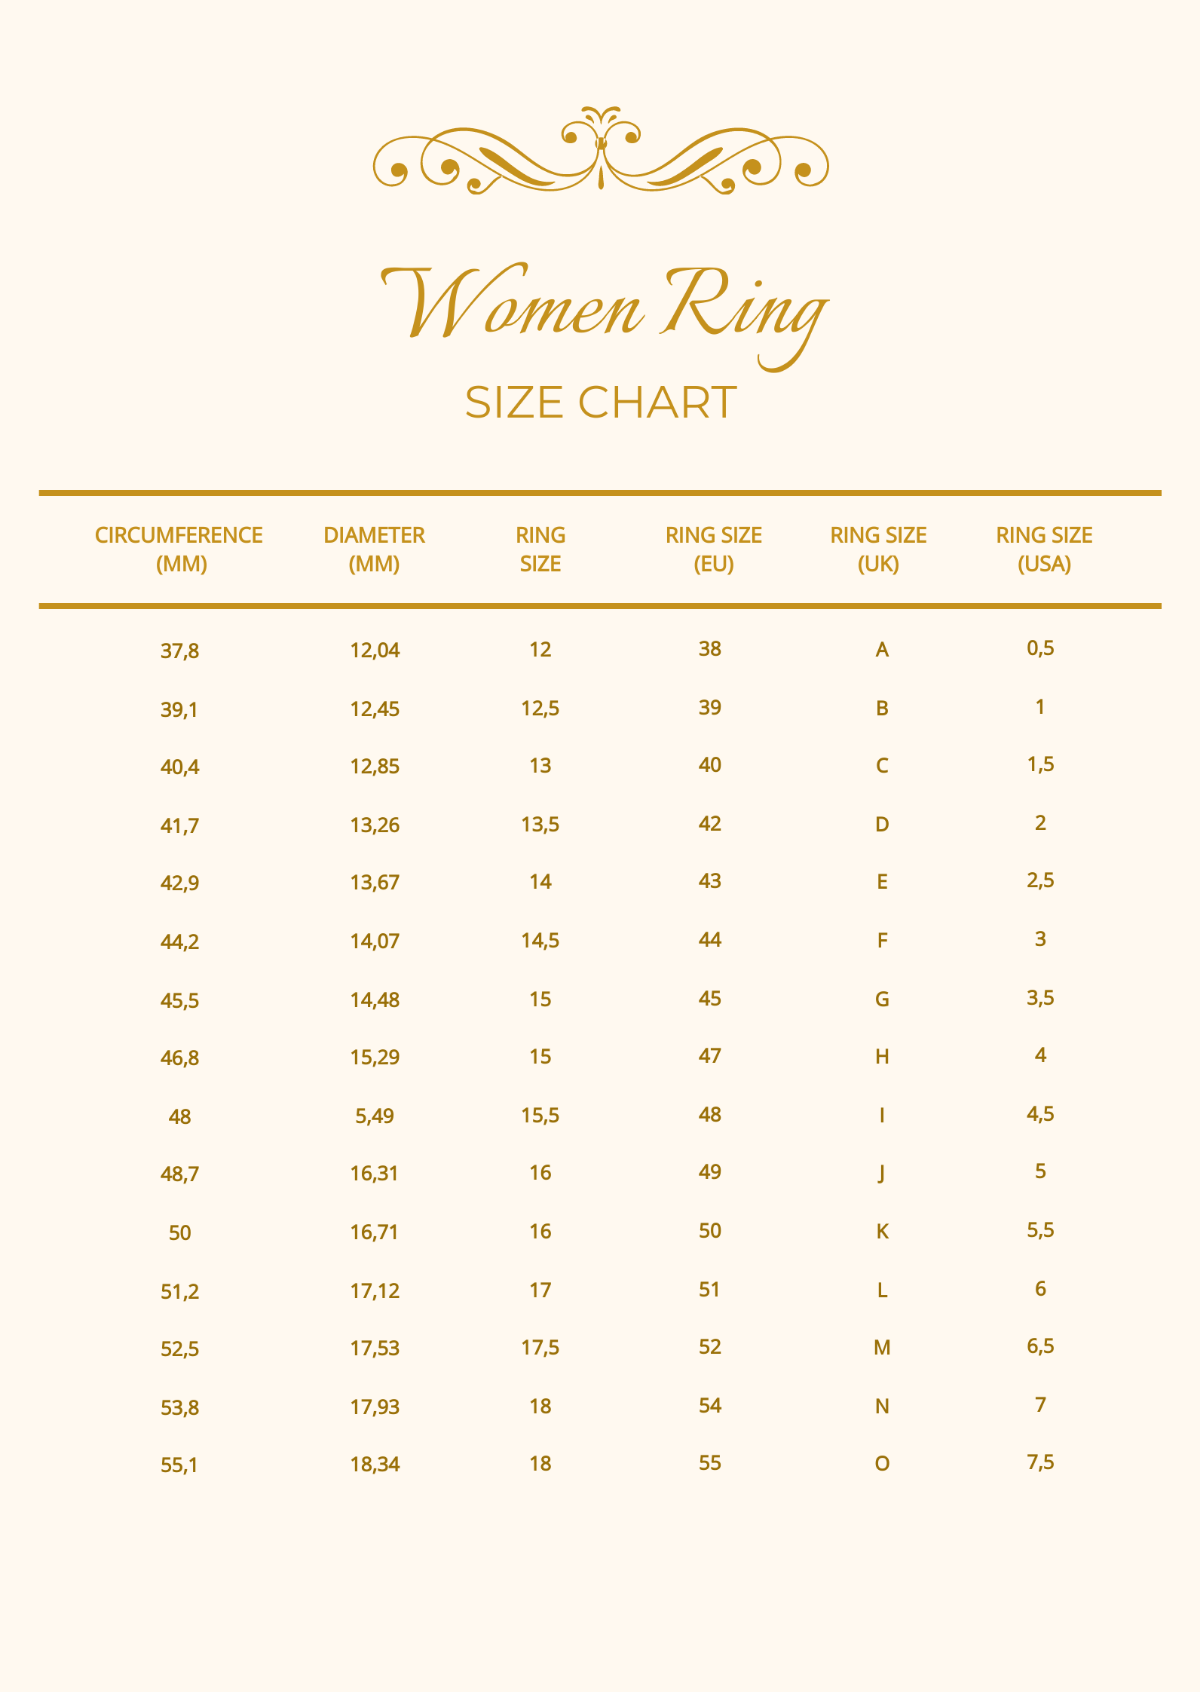 Women Ring Size Chart Template